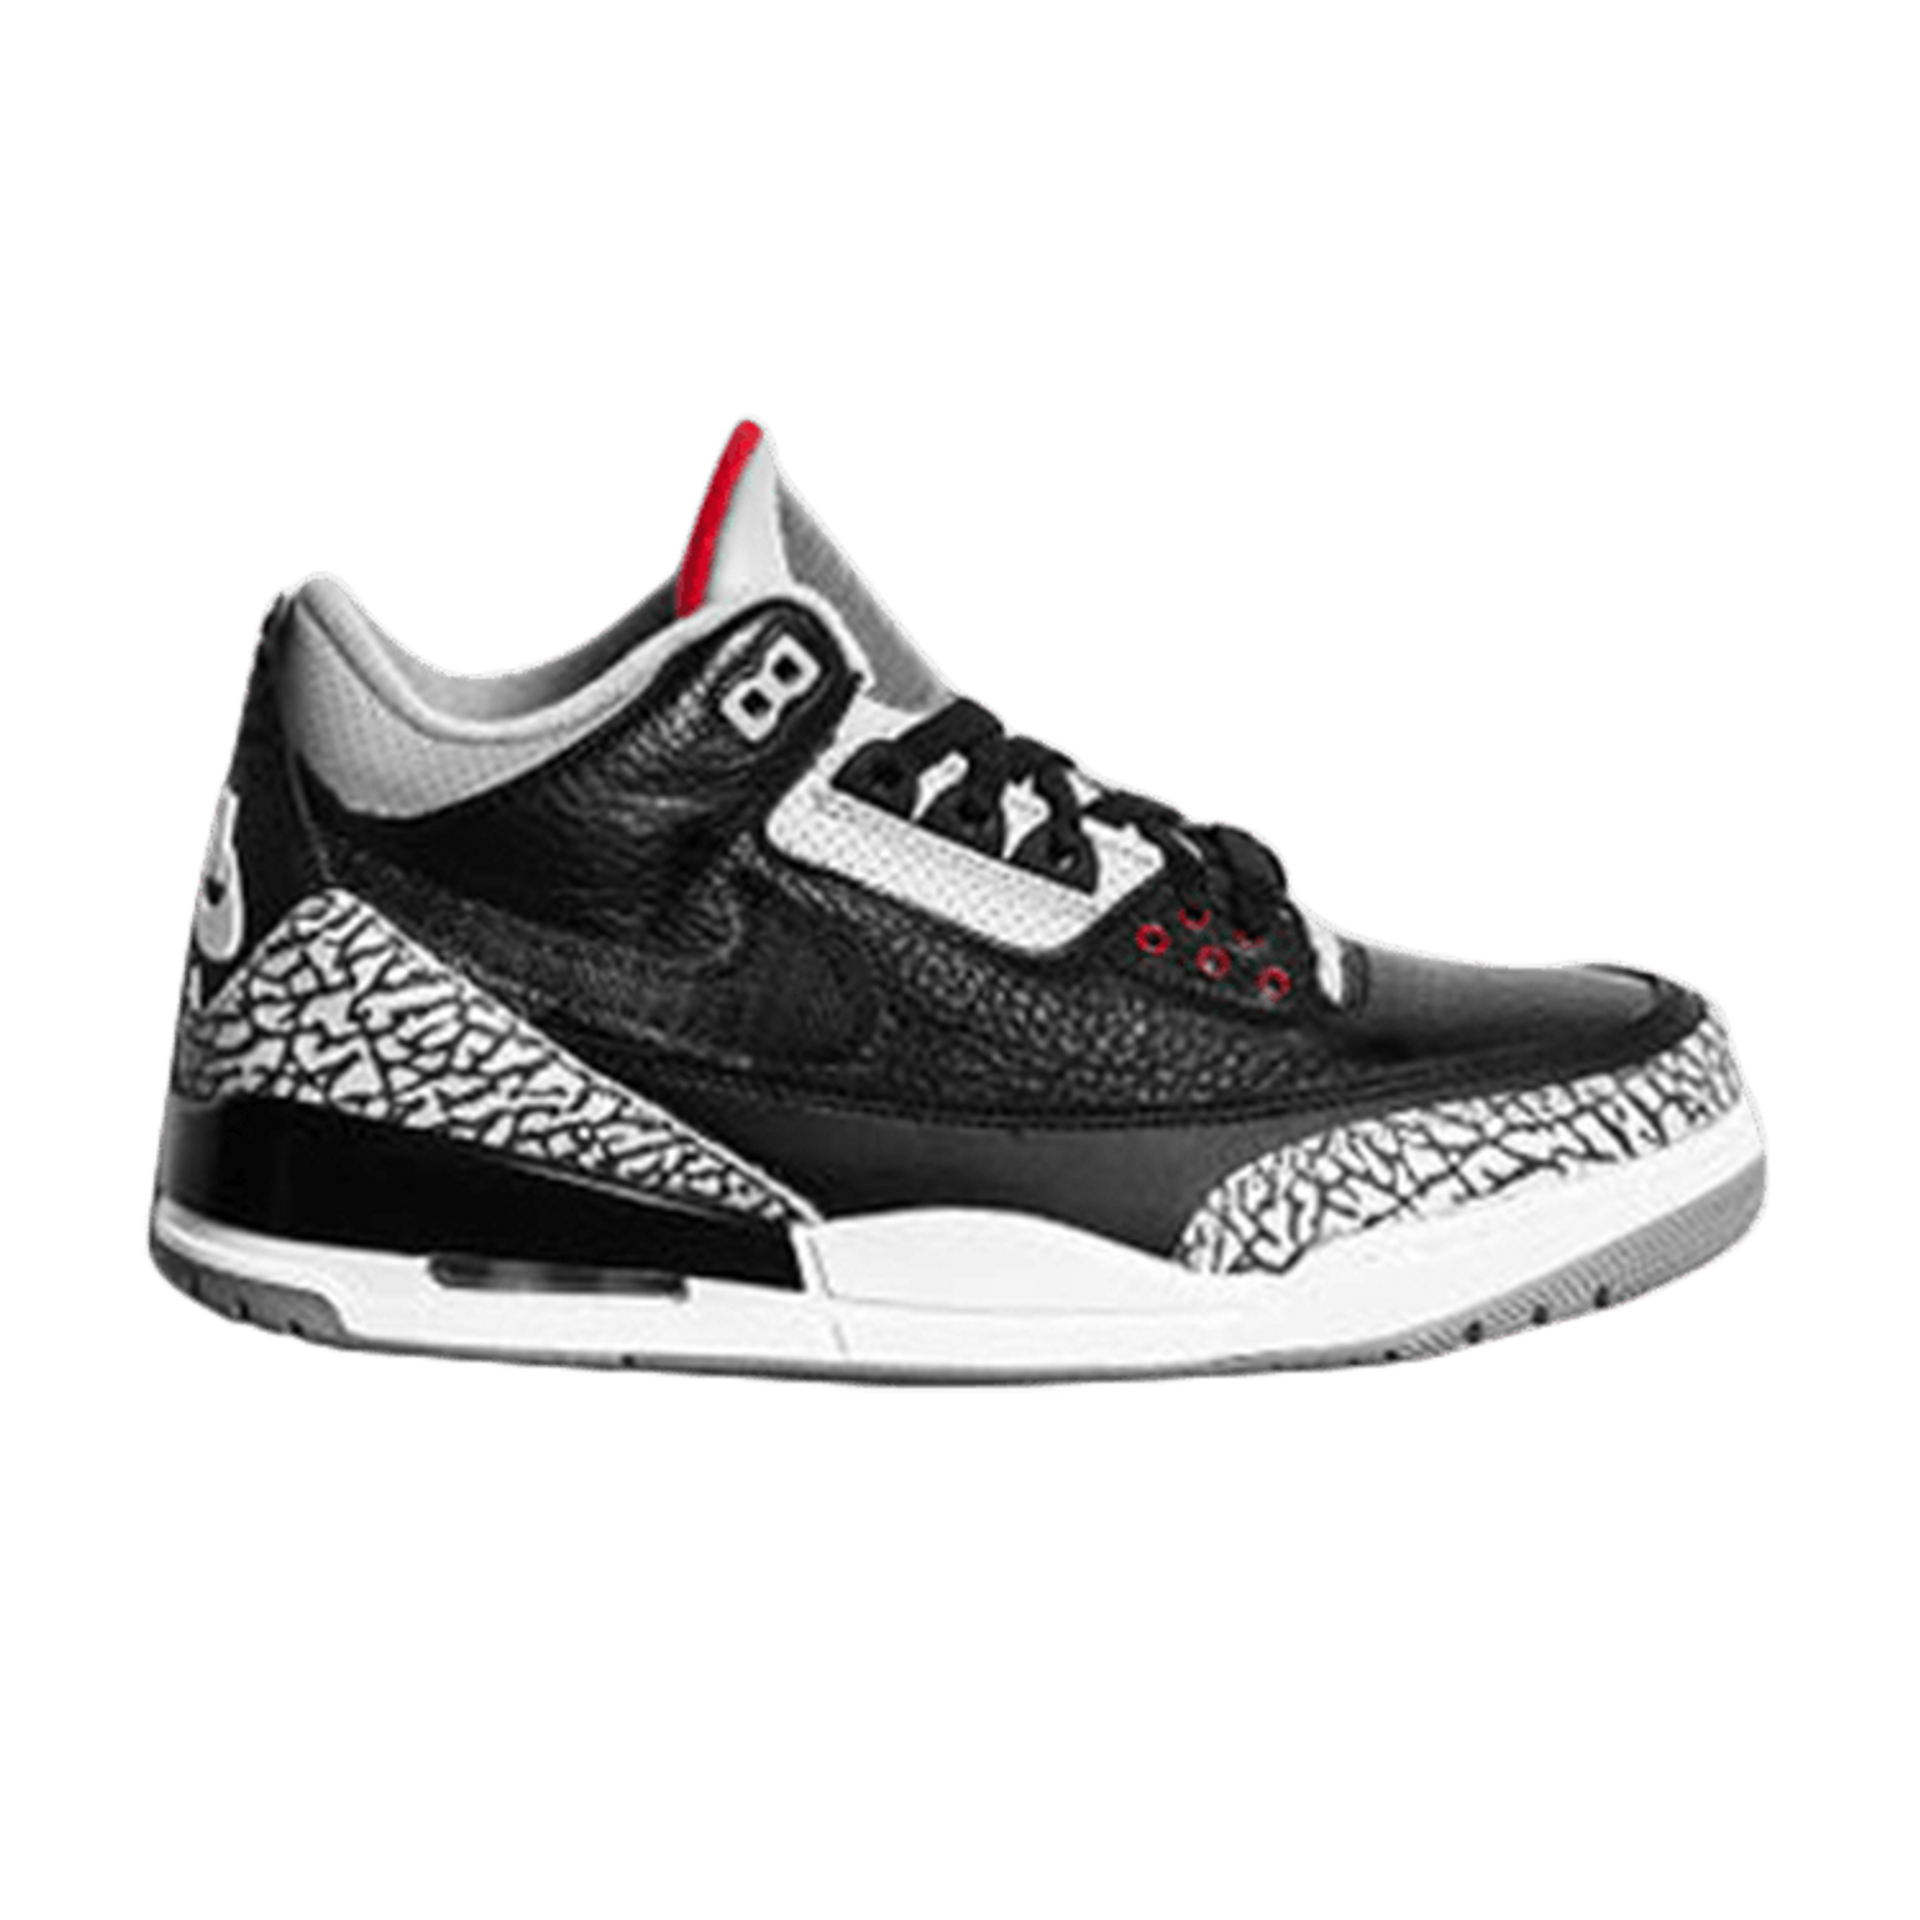 The Shoe Surgeon x Air Jordan 3 Retro 'JTH'